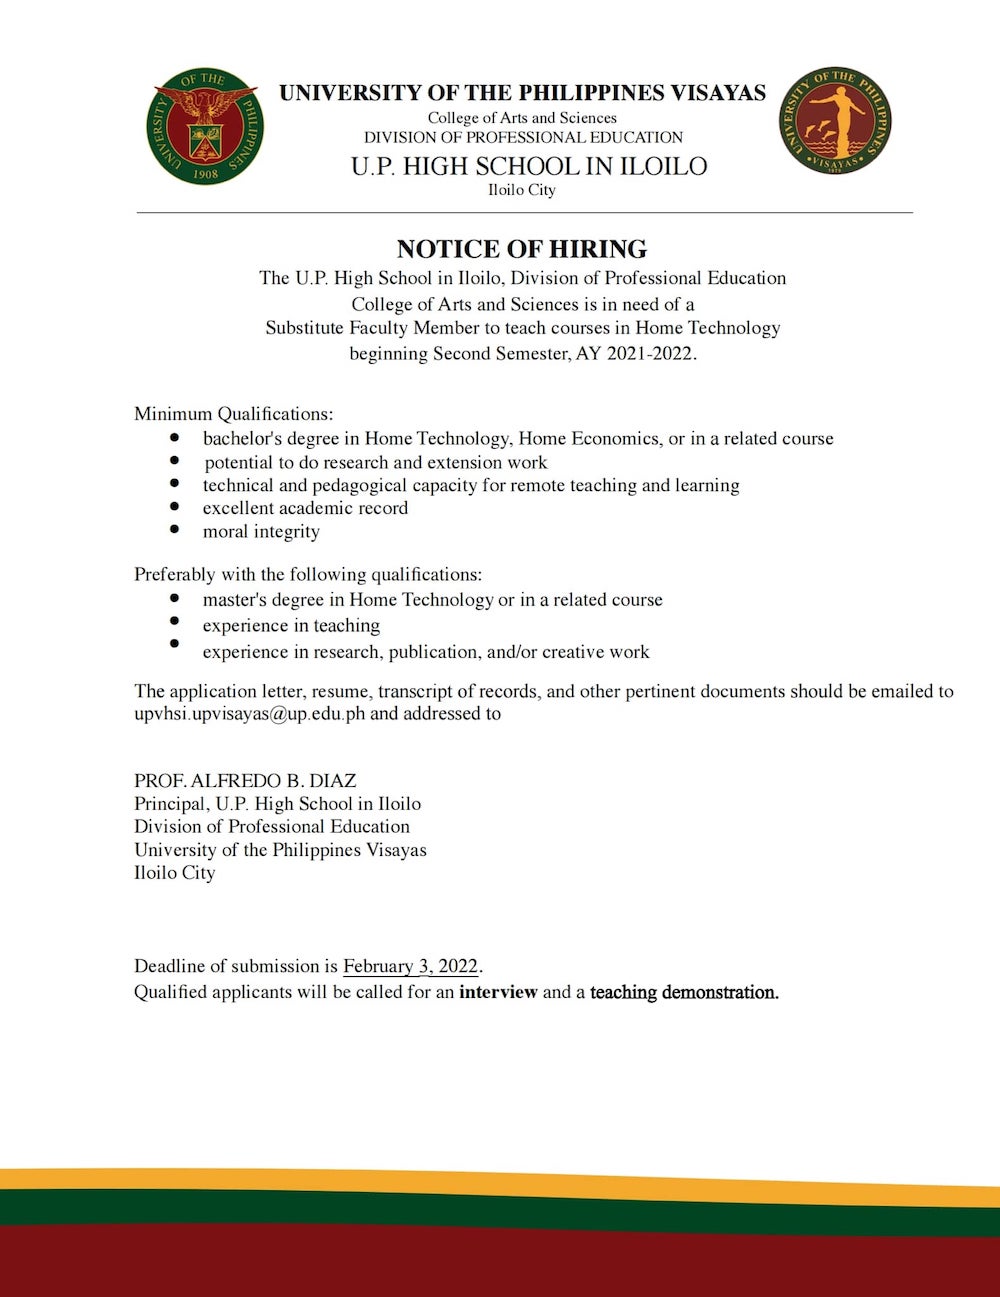 hiring uphsi faculty 0122